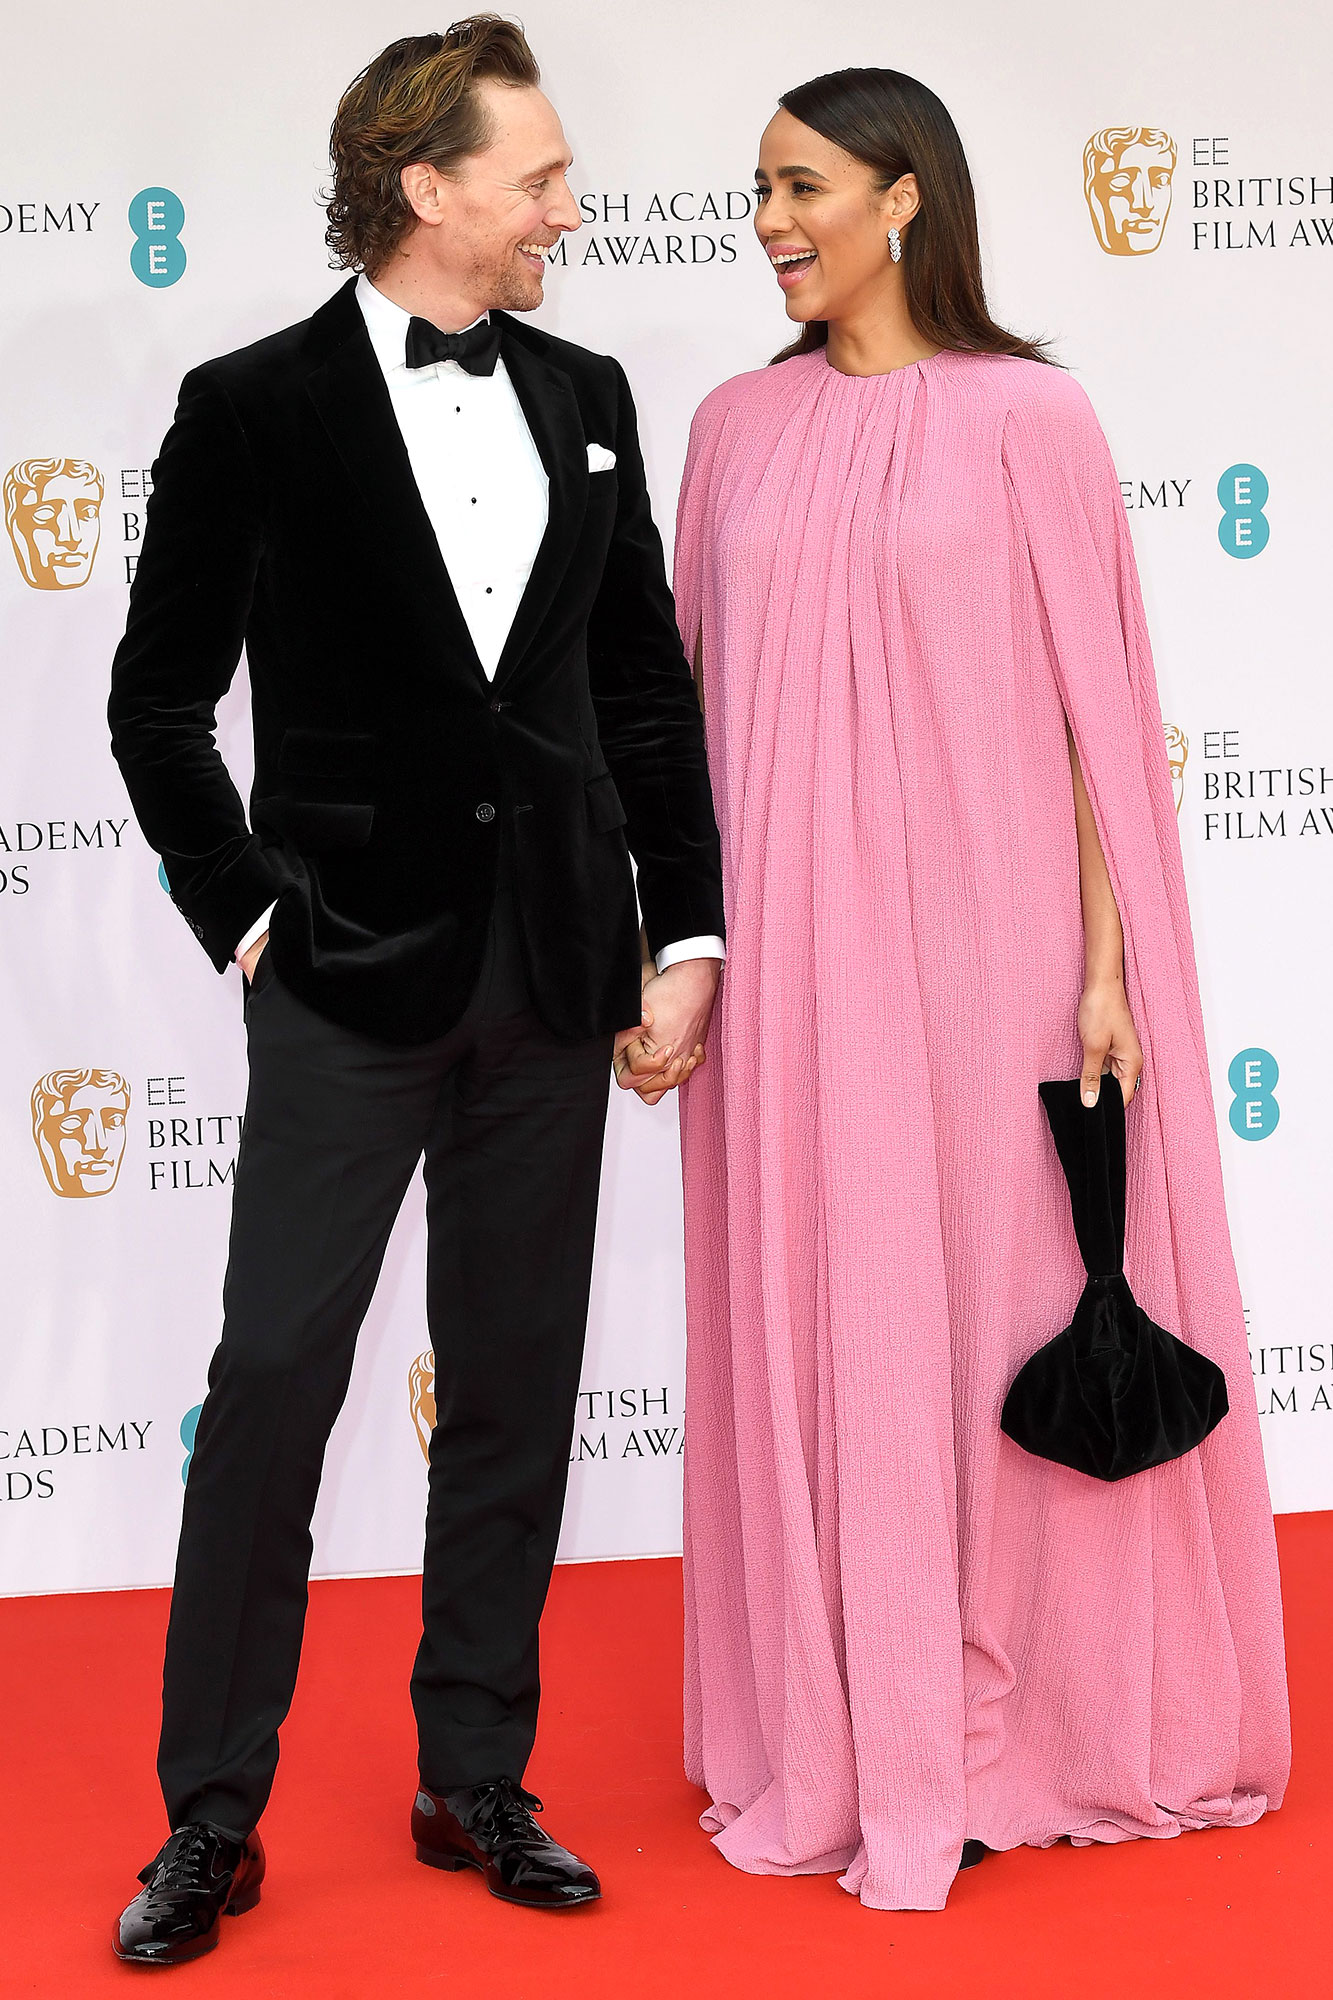 Tom Hiddleston and Zawe Ashton Are Engaged: Report